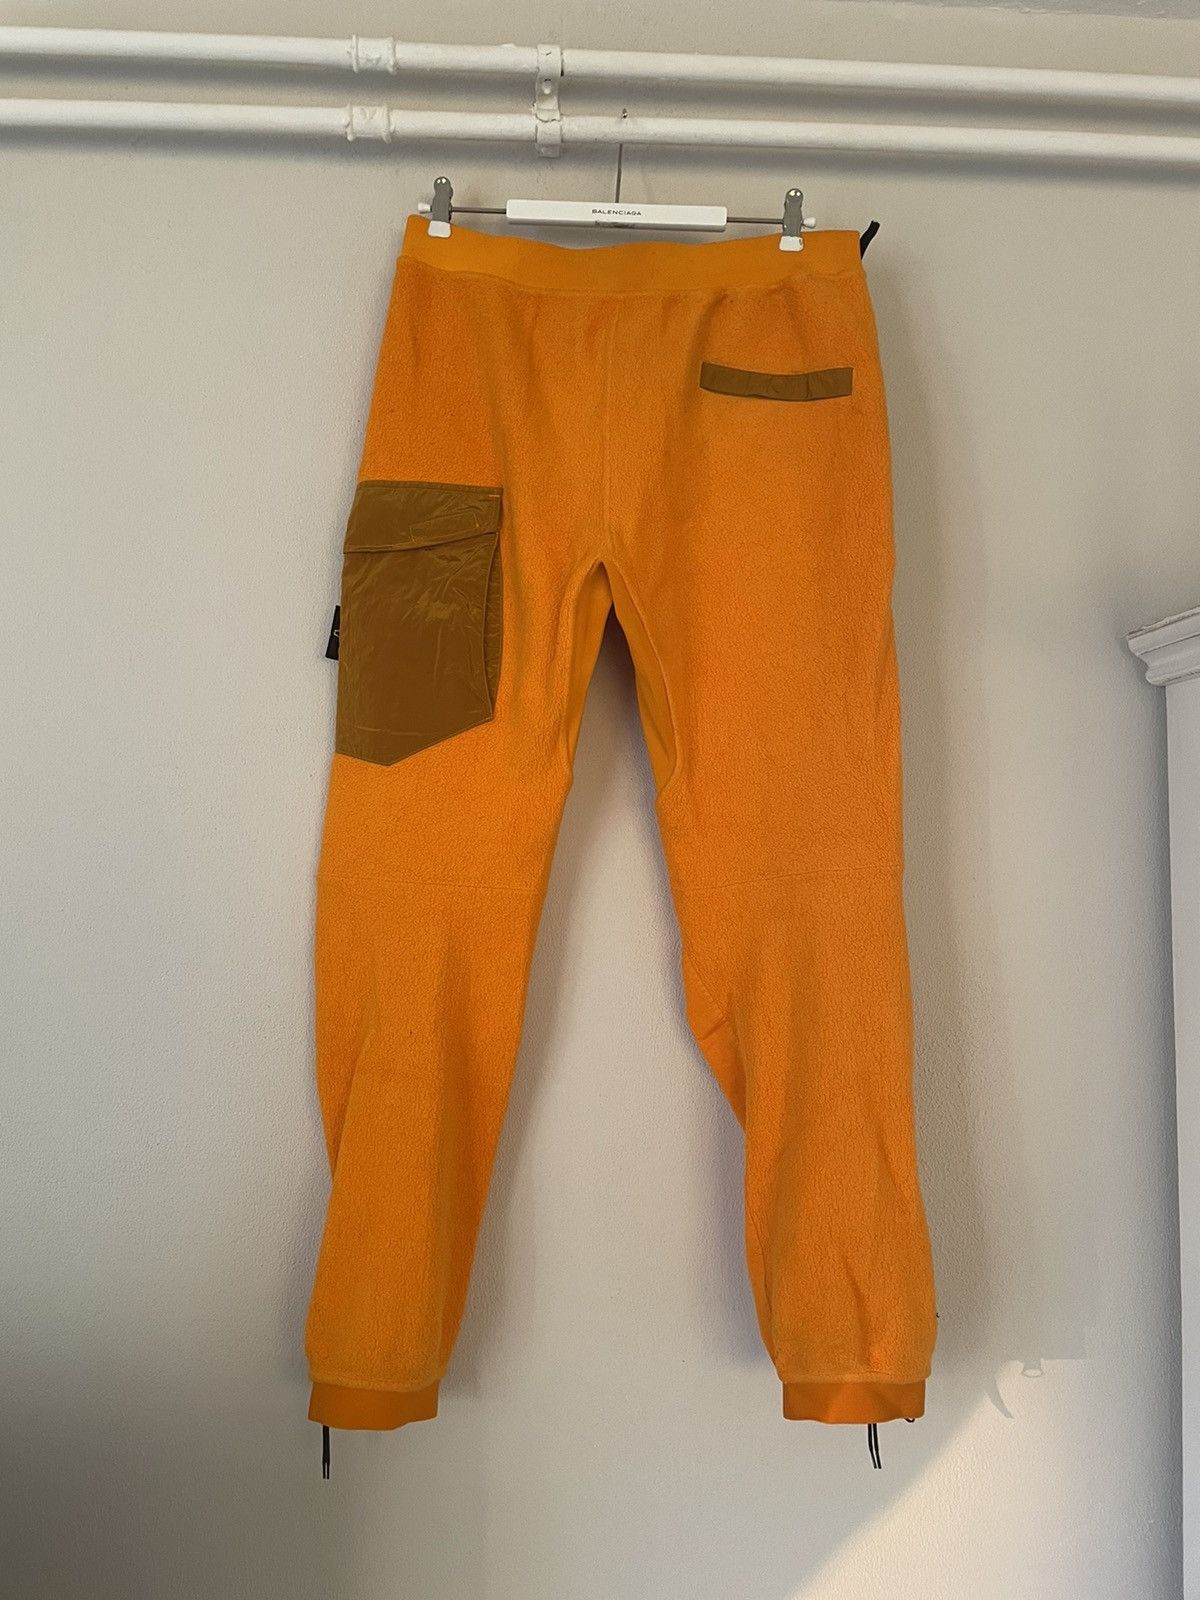 Stone Island Orange Cargo Sweat Pants Size US 34 / EU 50 - 2 Preview